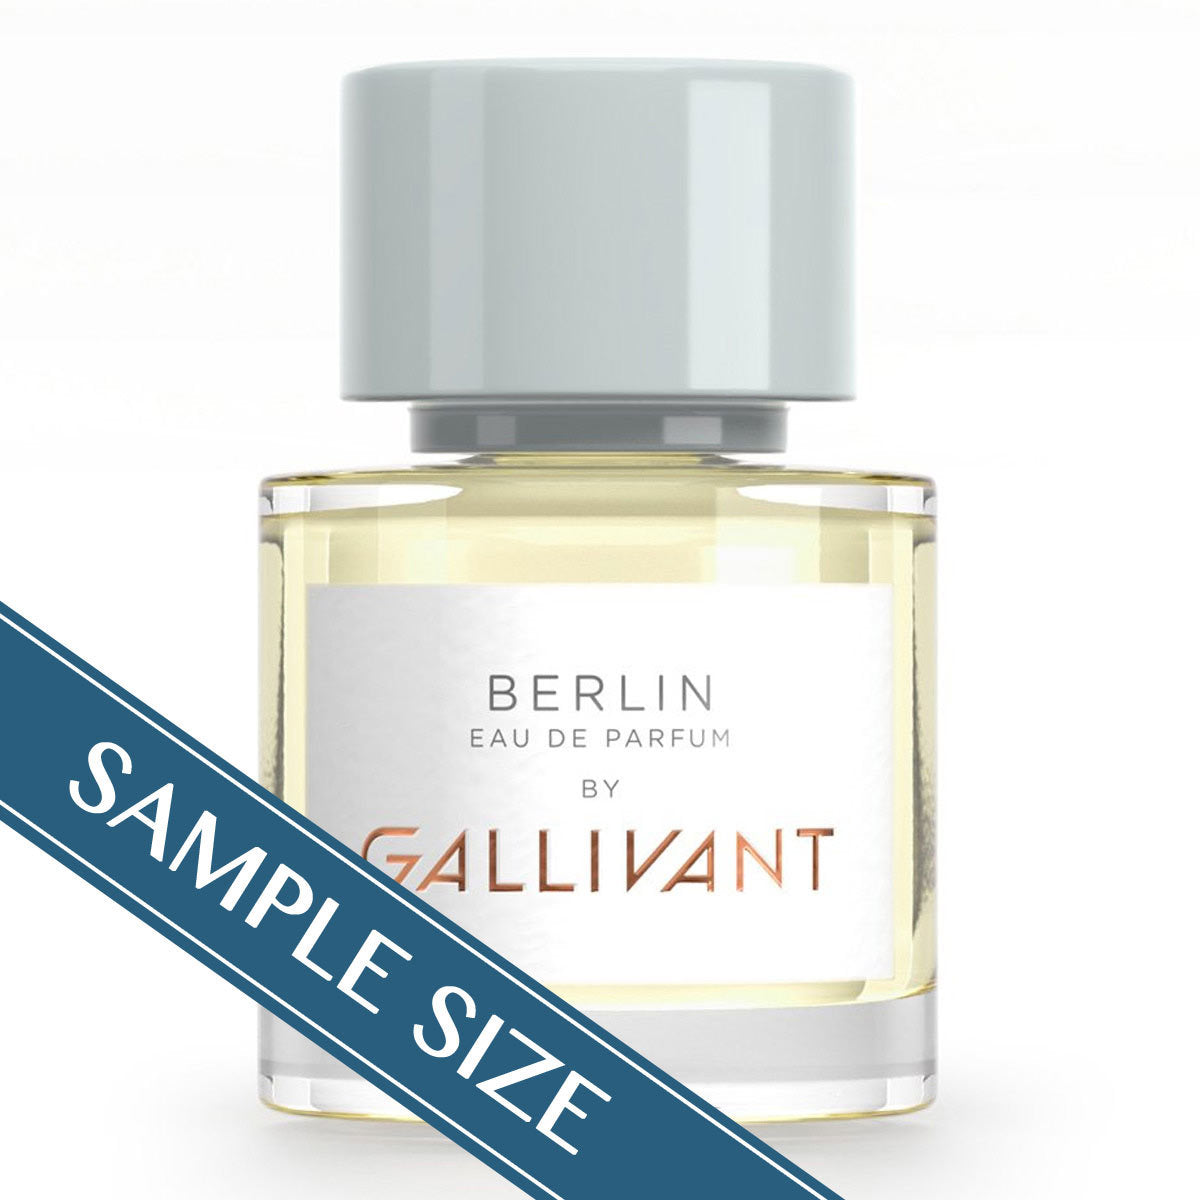 Primary image of Sample - Berlin Eau de Parfum